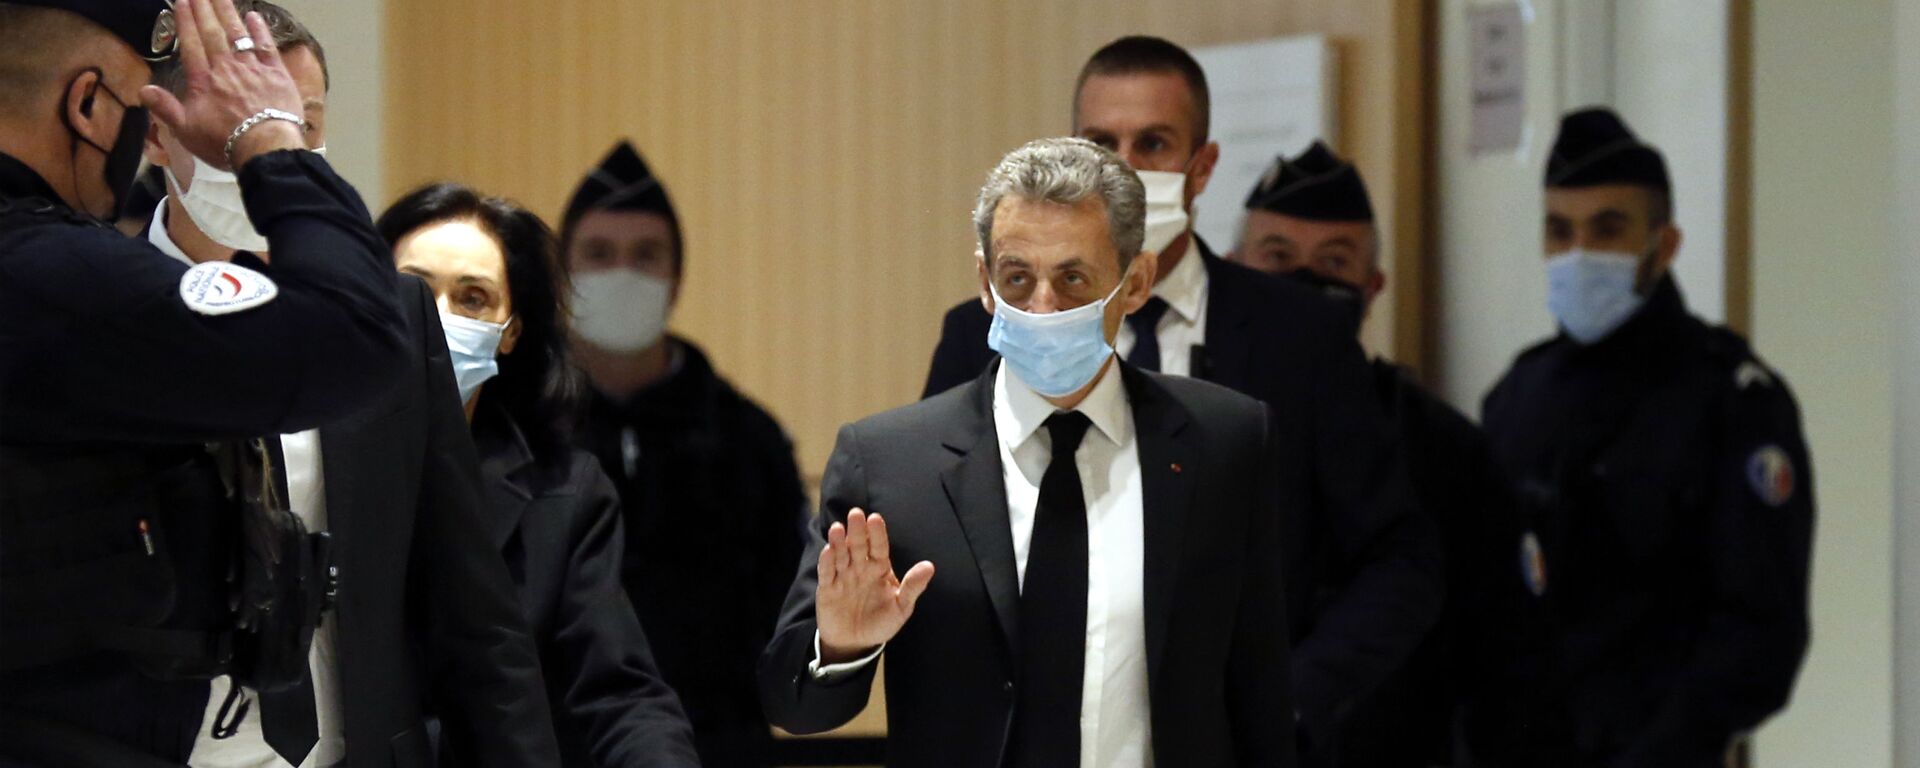 Former French President Nicolas Sarkozy arrives at the courtroom Monday, Dec. 7, 2020 in Paris - Sputnik International, 1920, 02.03.2021